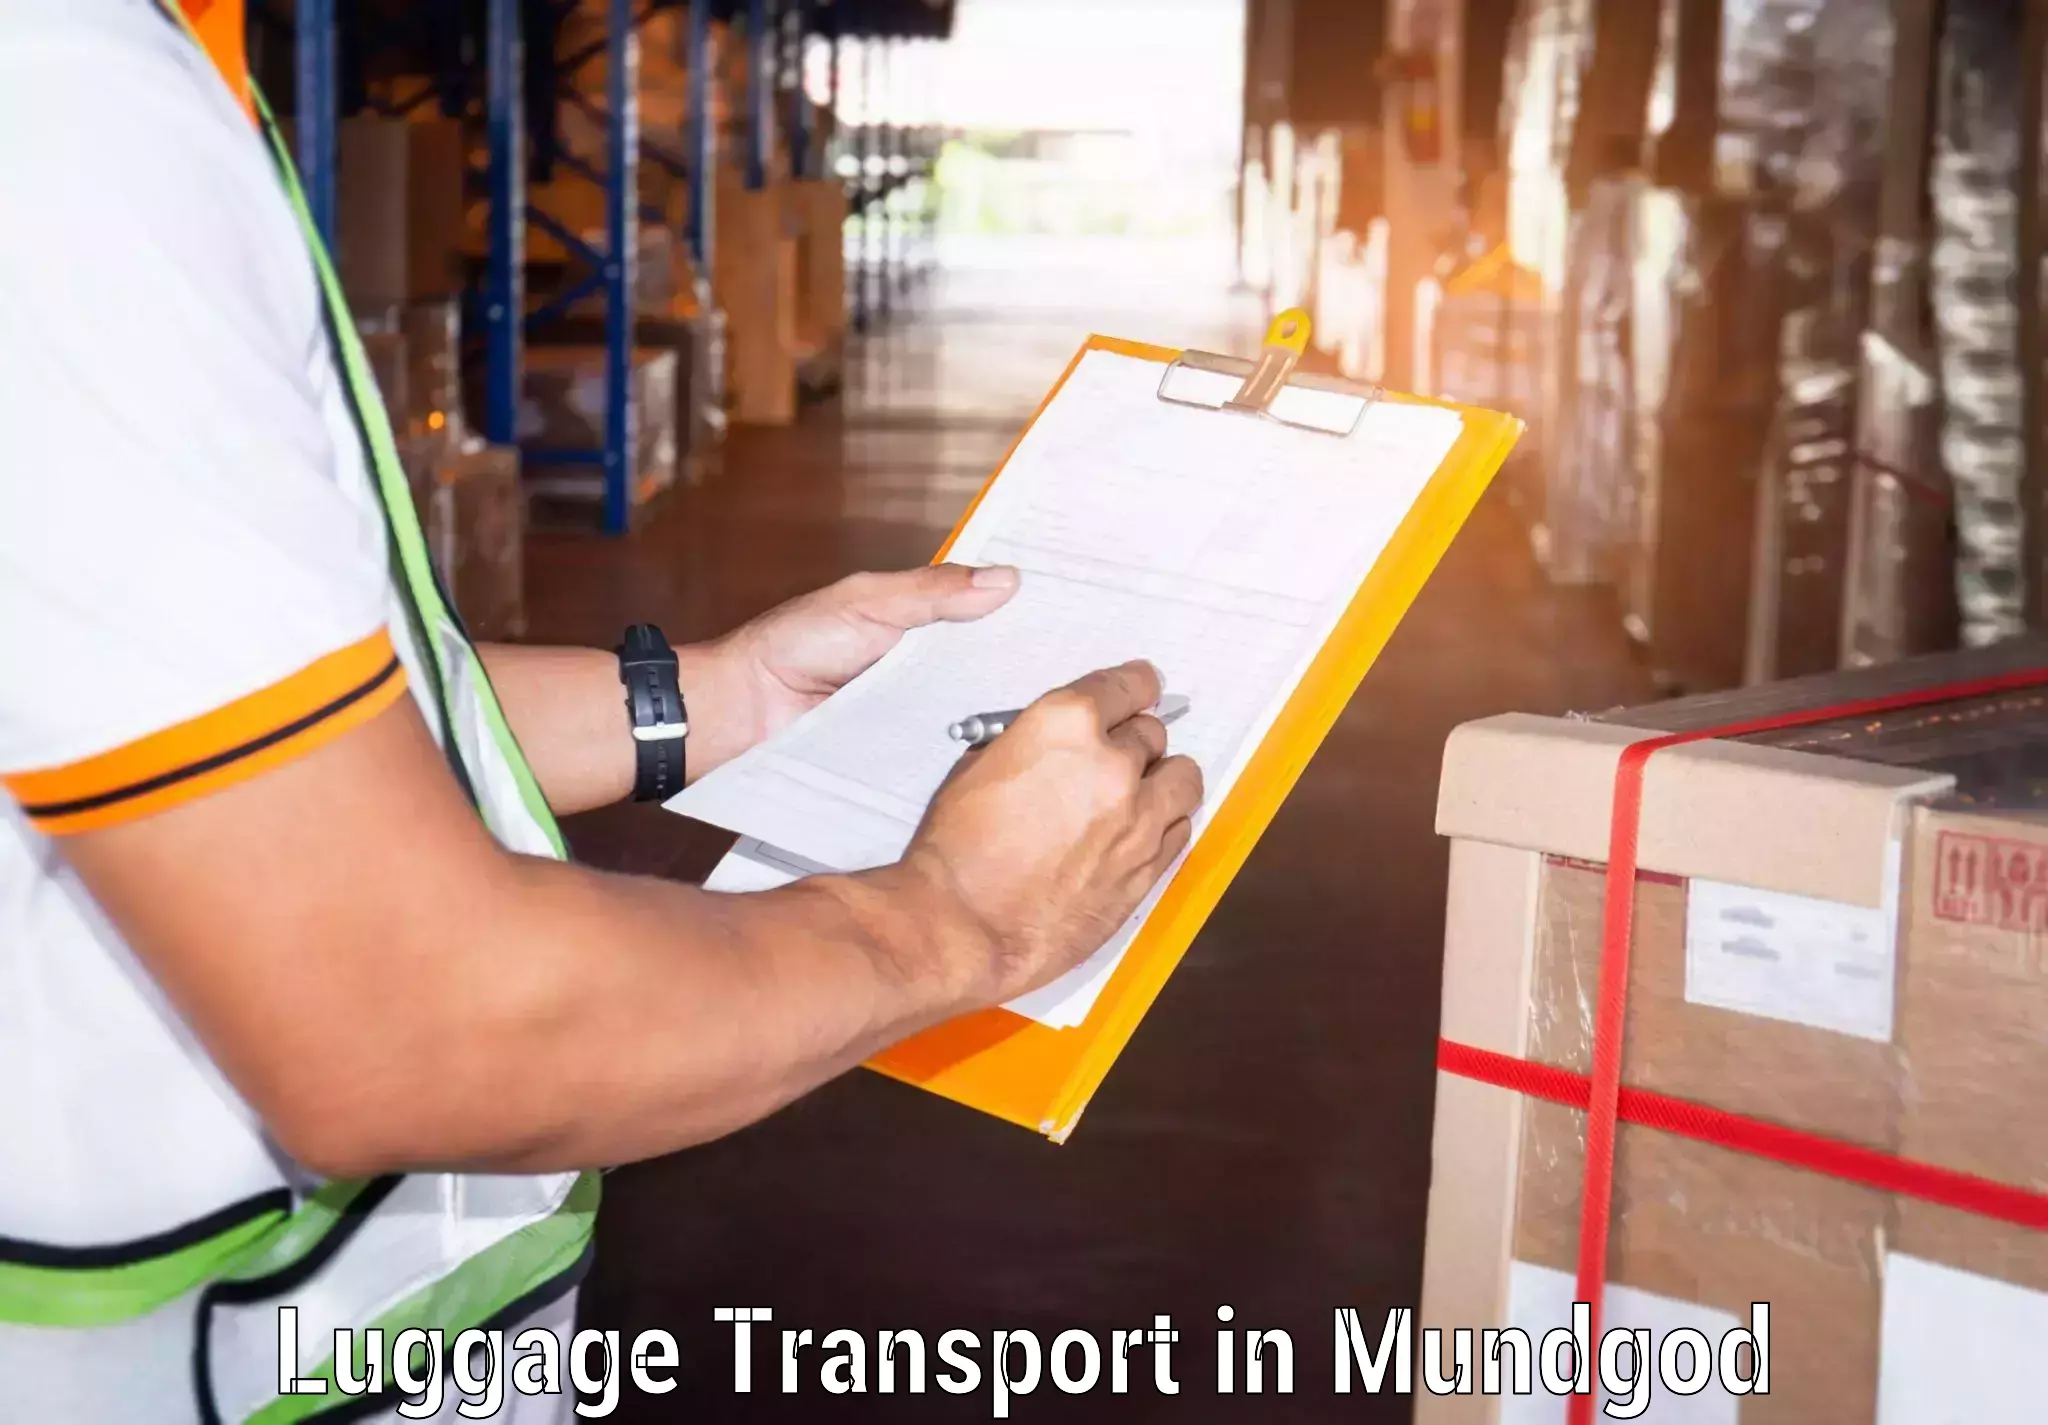 Luggage transport operations in Mundgod